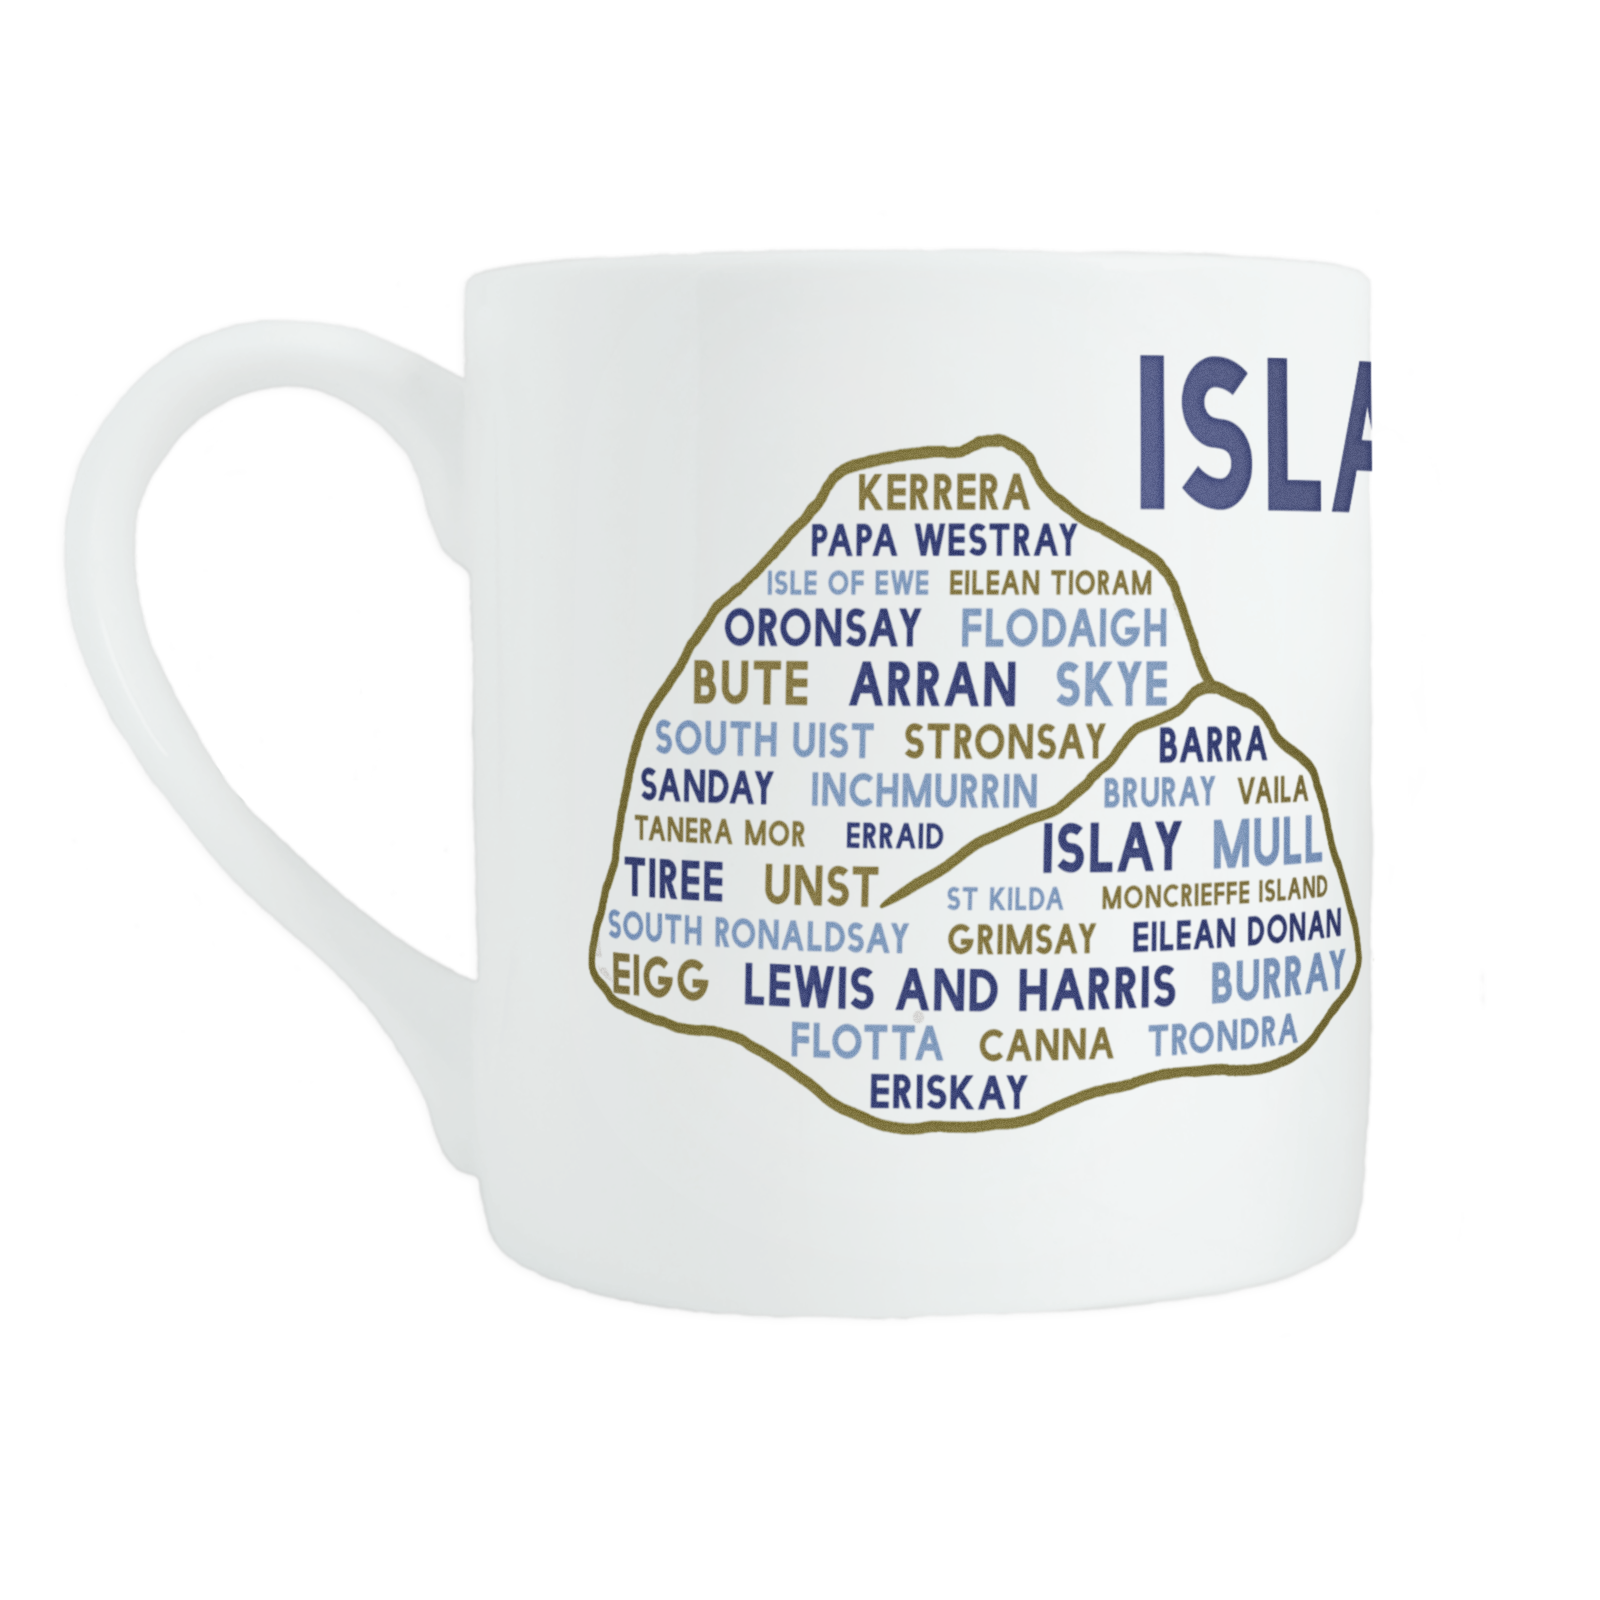 Scottish islands bone china mug